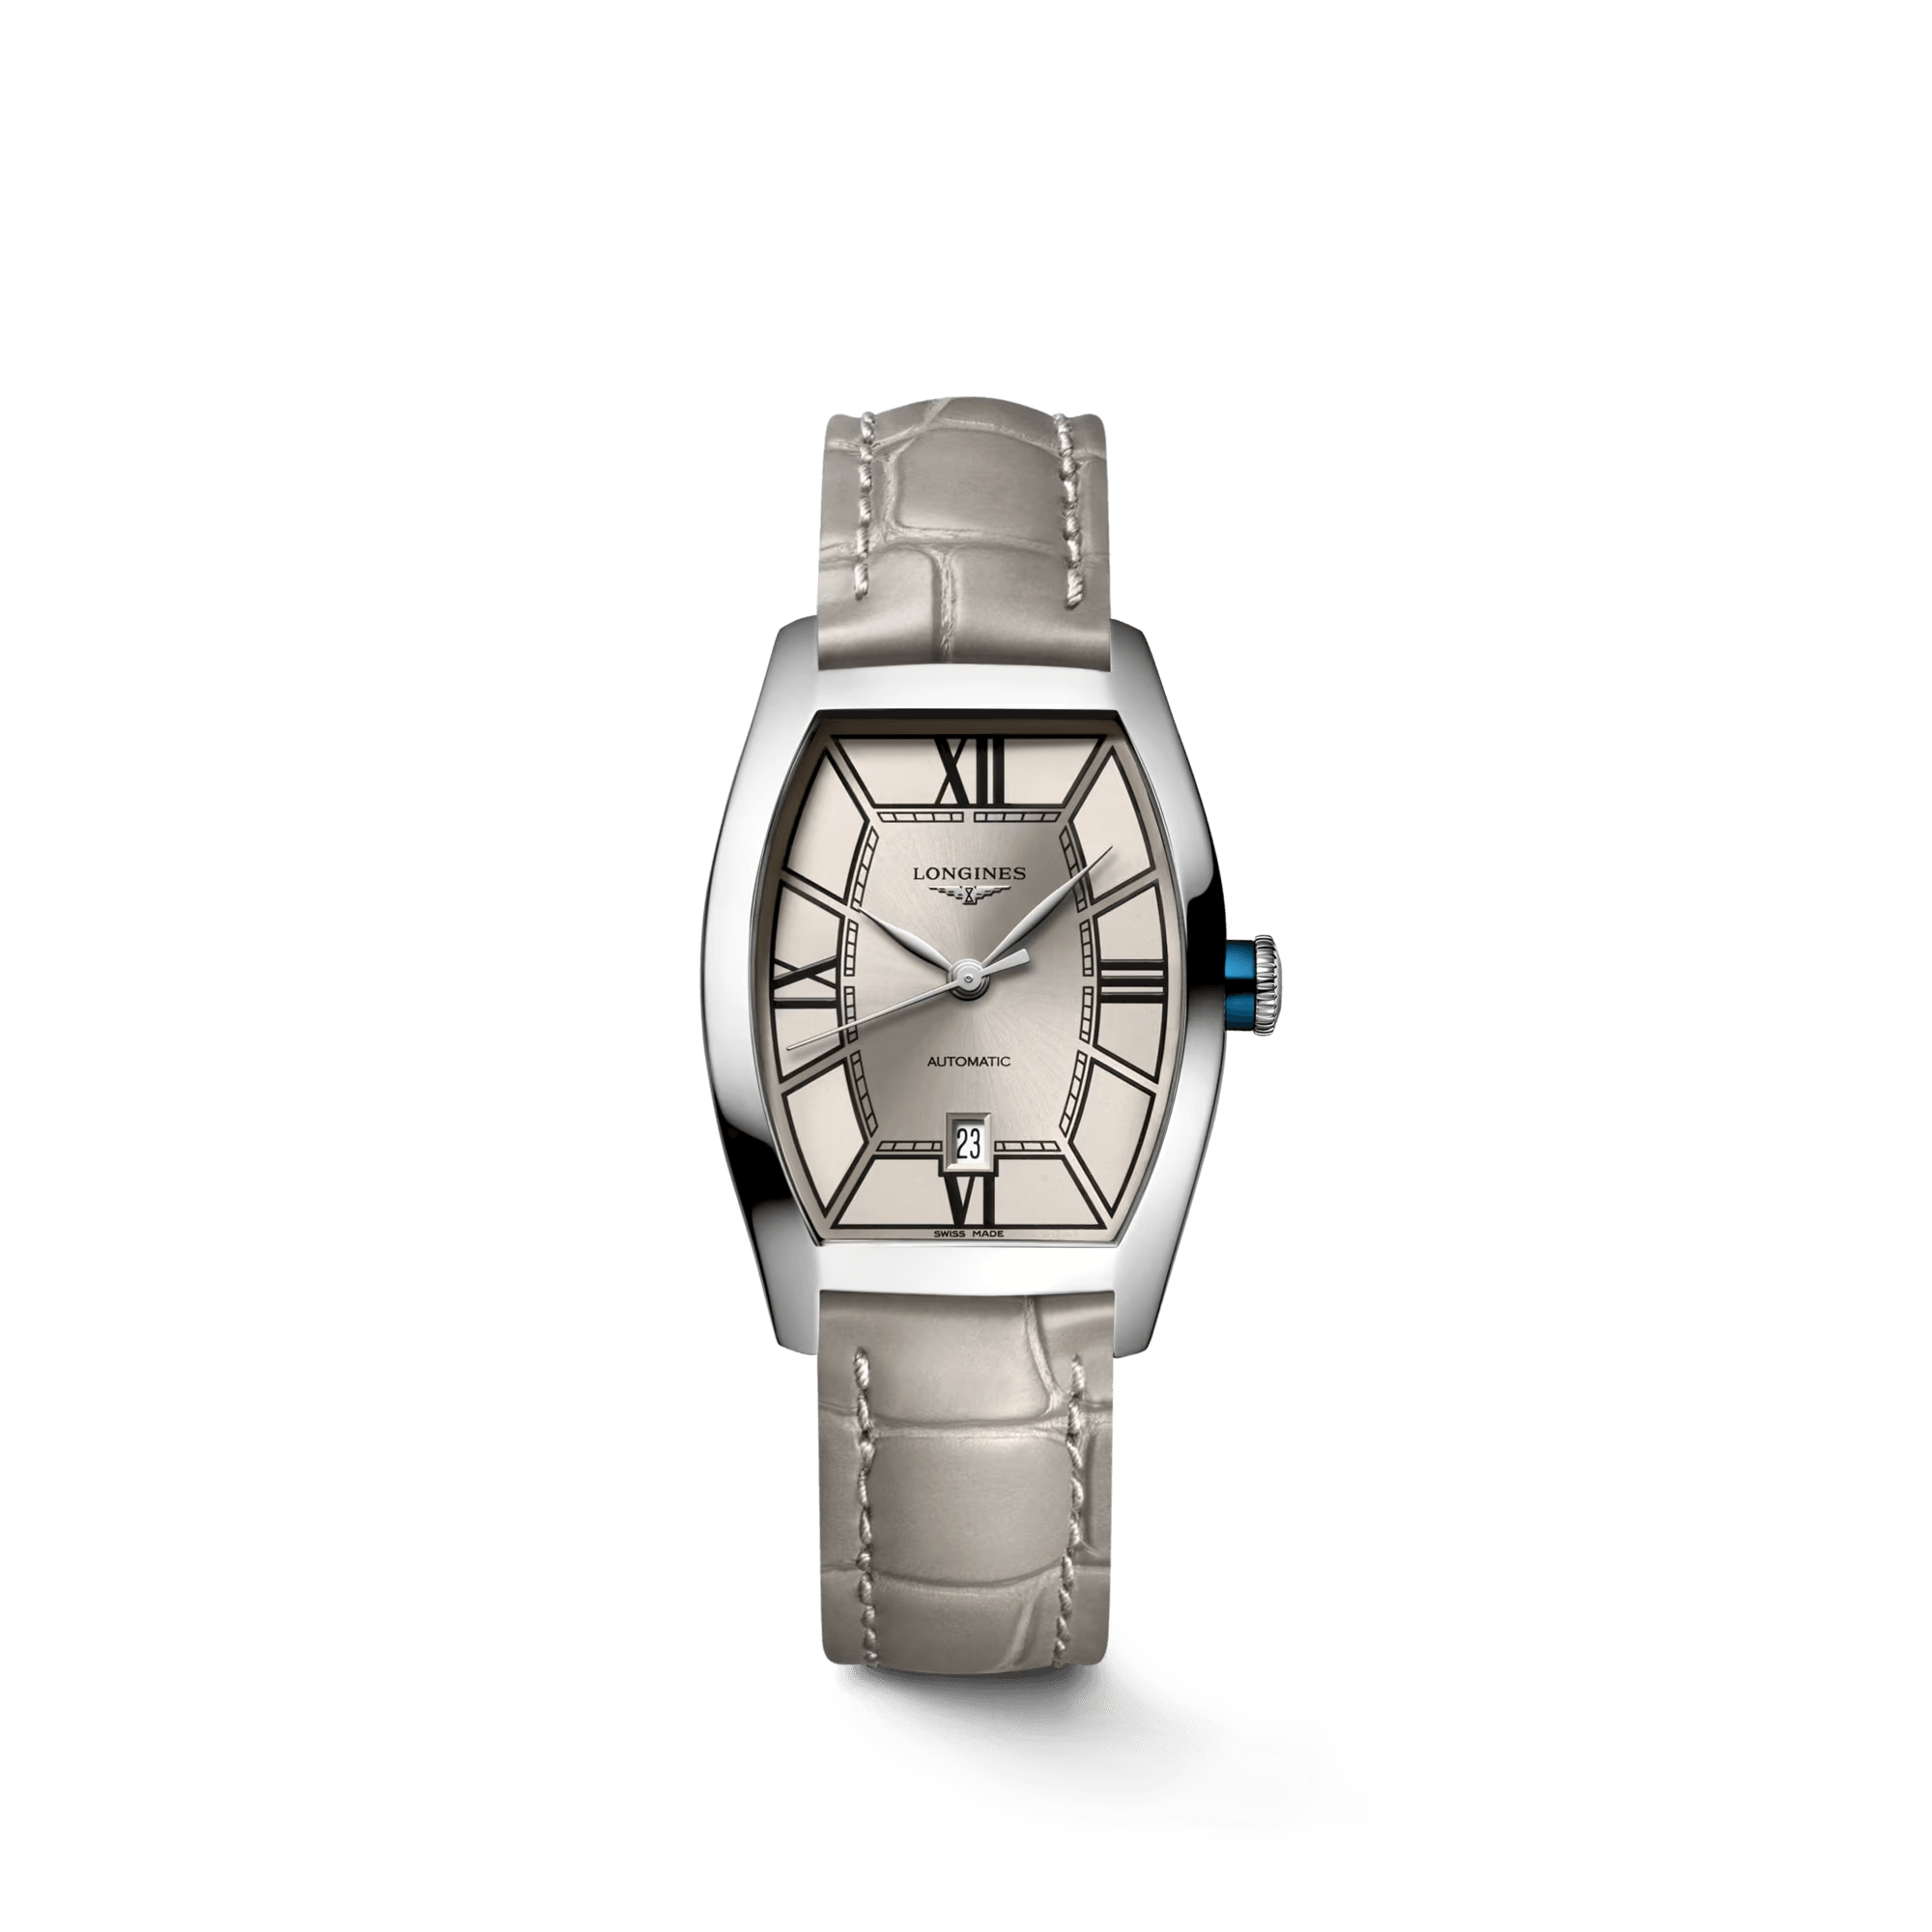 Longines Evidenza Automatic Women's Watch L21424662